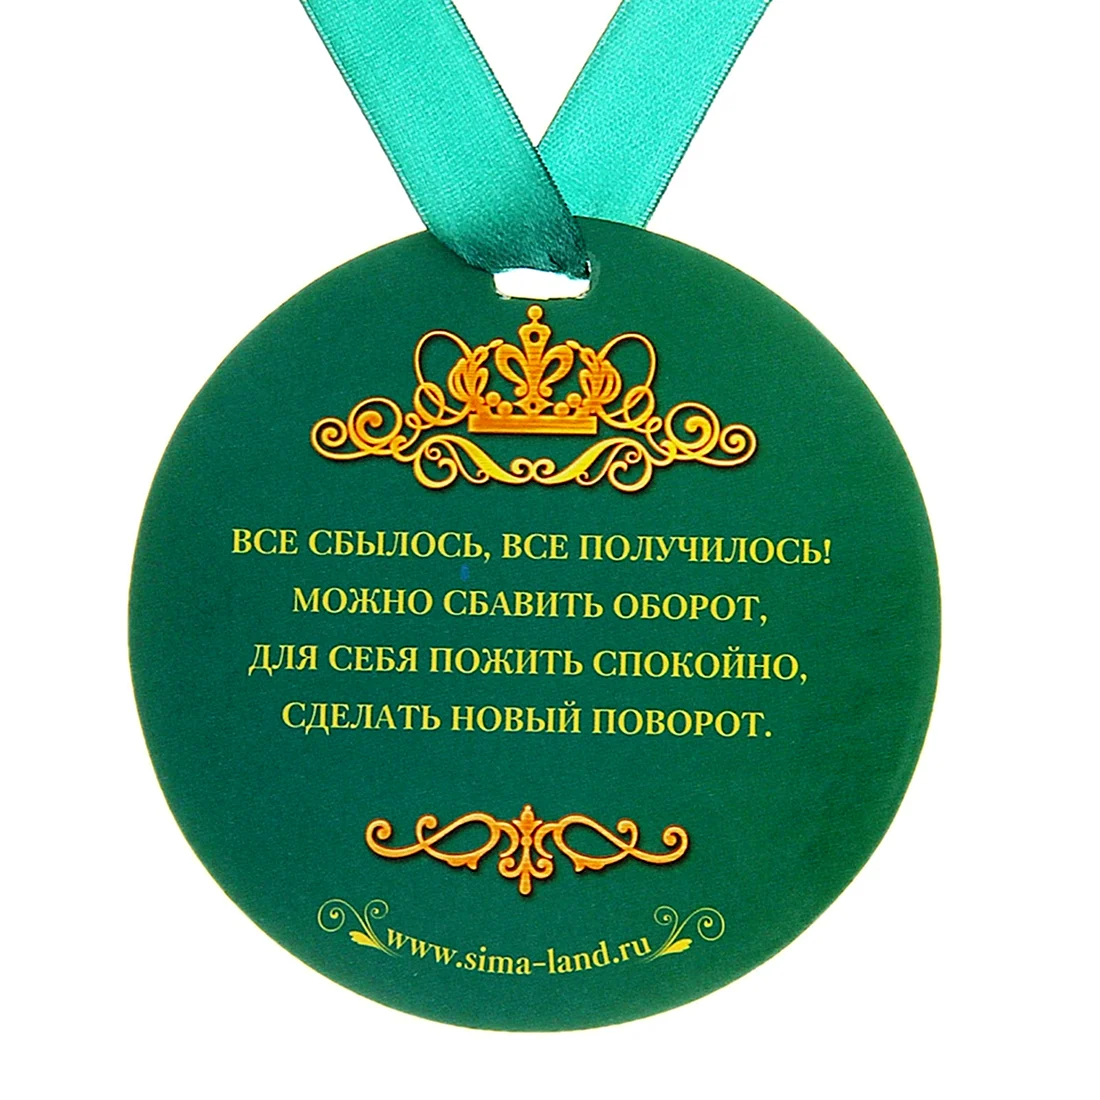 Надпись на медали для юбиляра. Открытка для мужчины